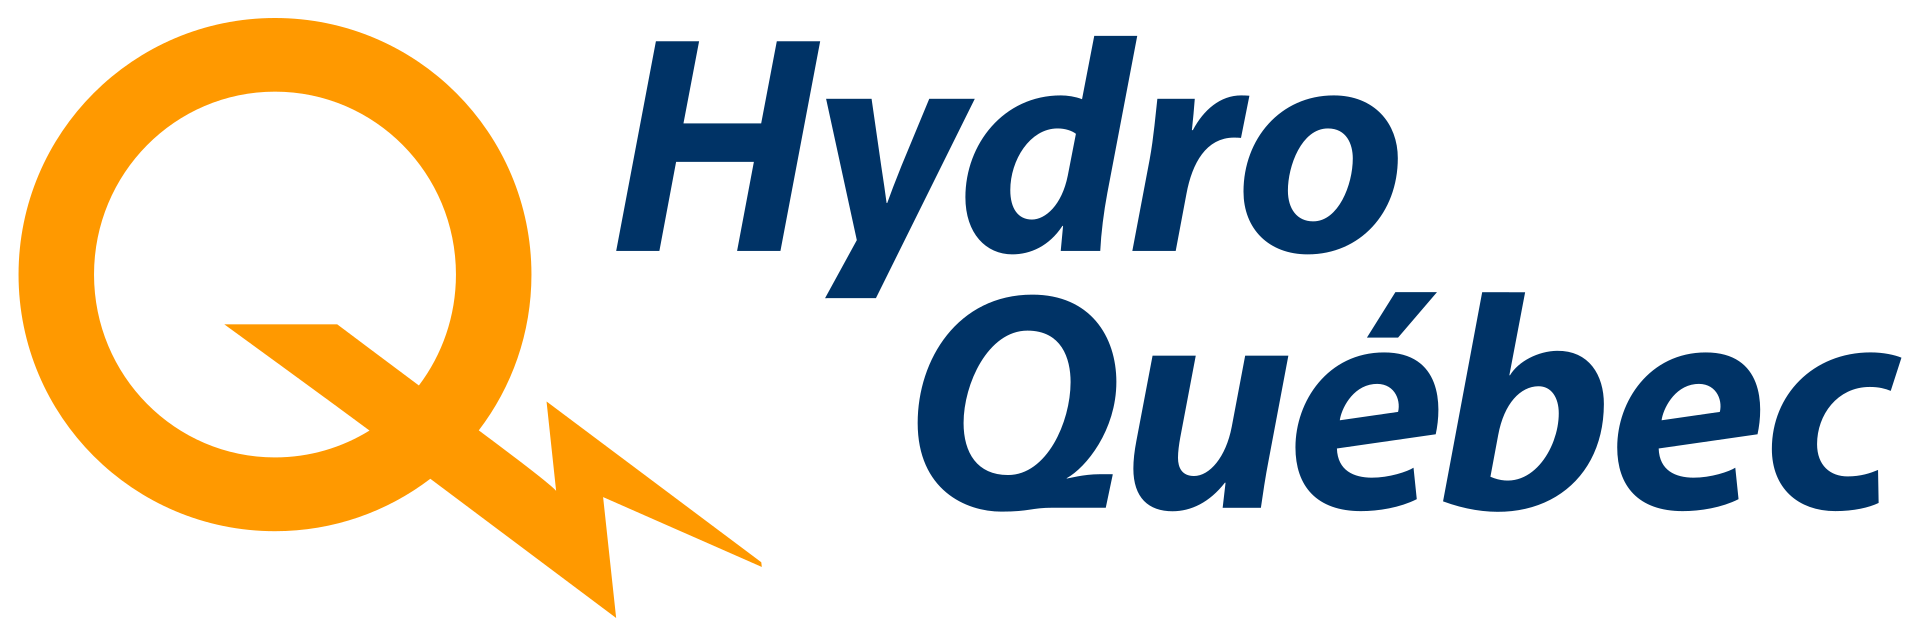 Hydro-Québec_logo.svg